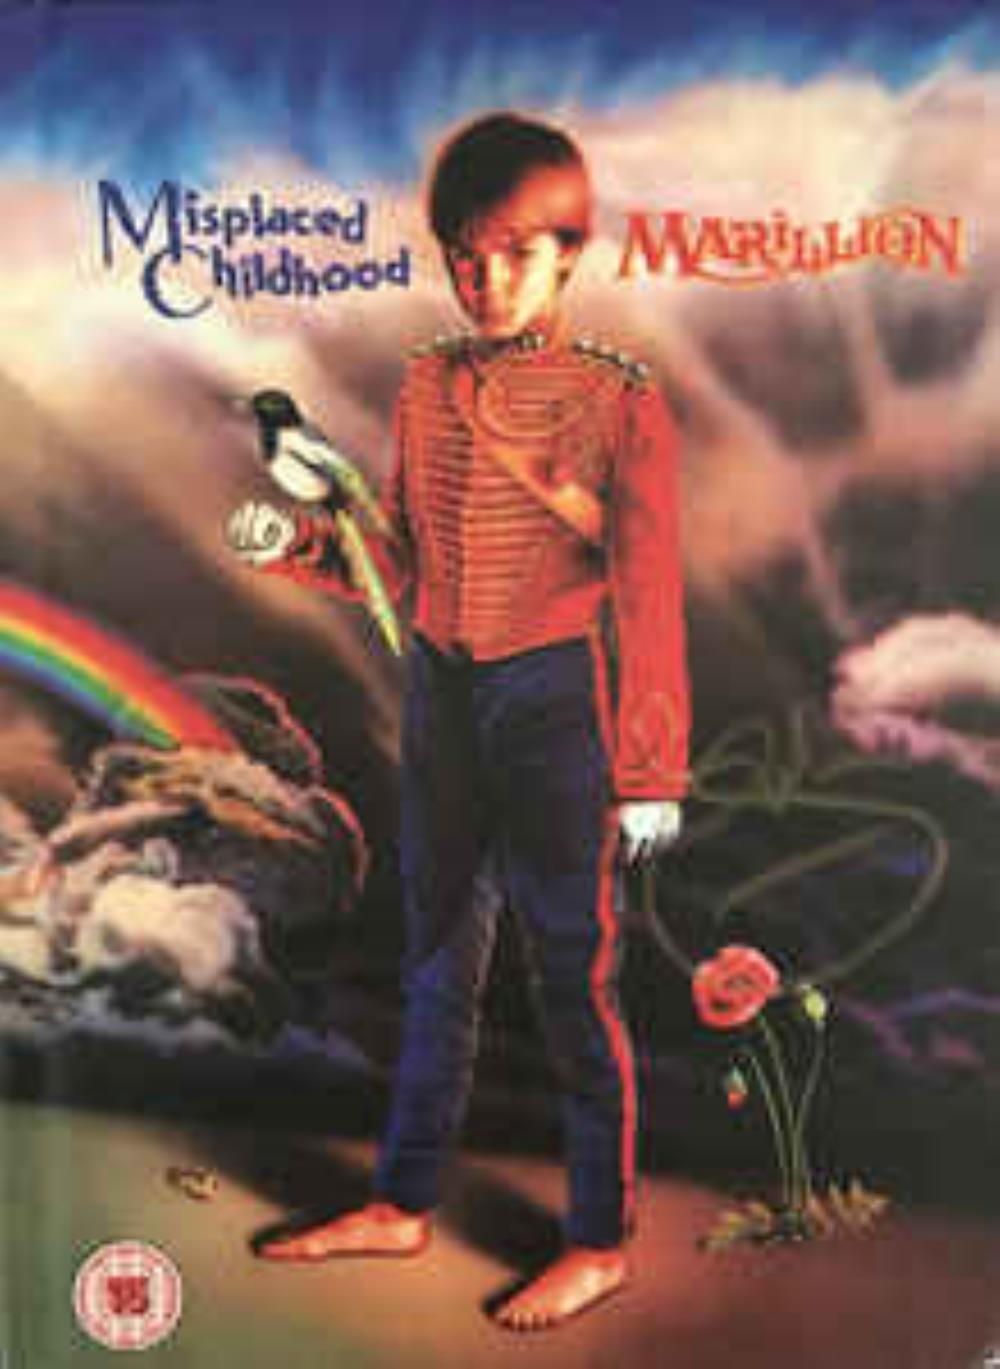 Marillion Misplaced Childhood album cover